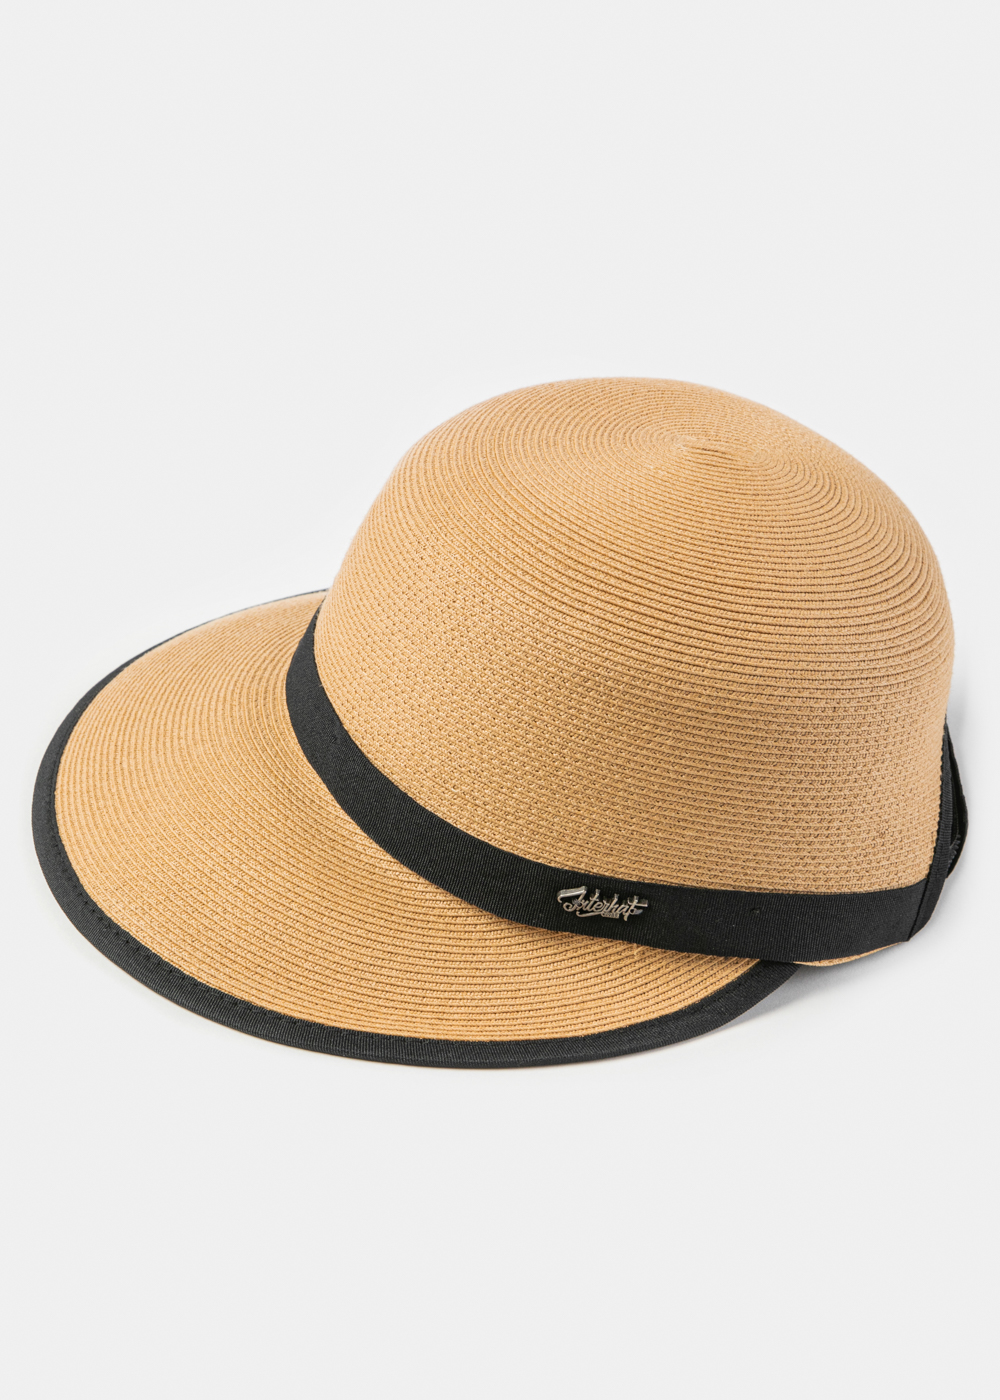 Brown Straw Jockey Style Hat